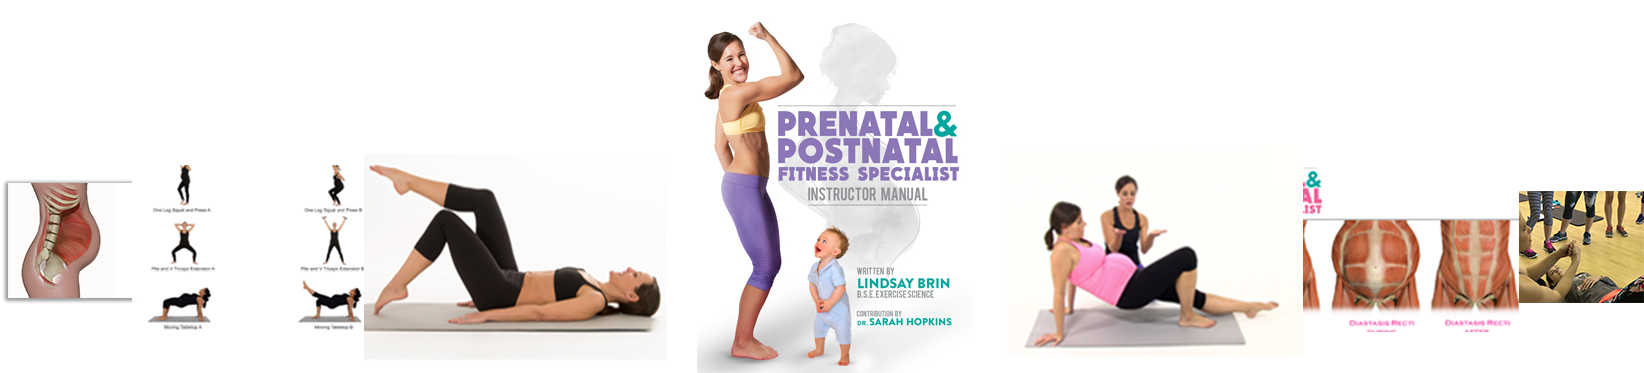 Become A Prenatal And Postnatal Fitness Specialist